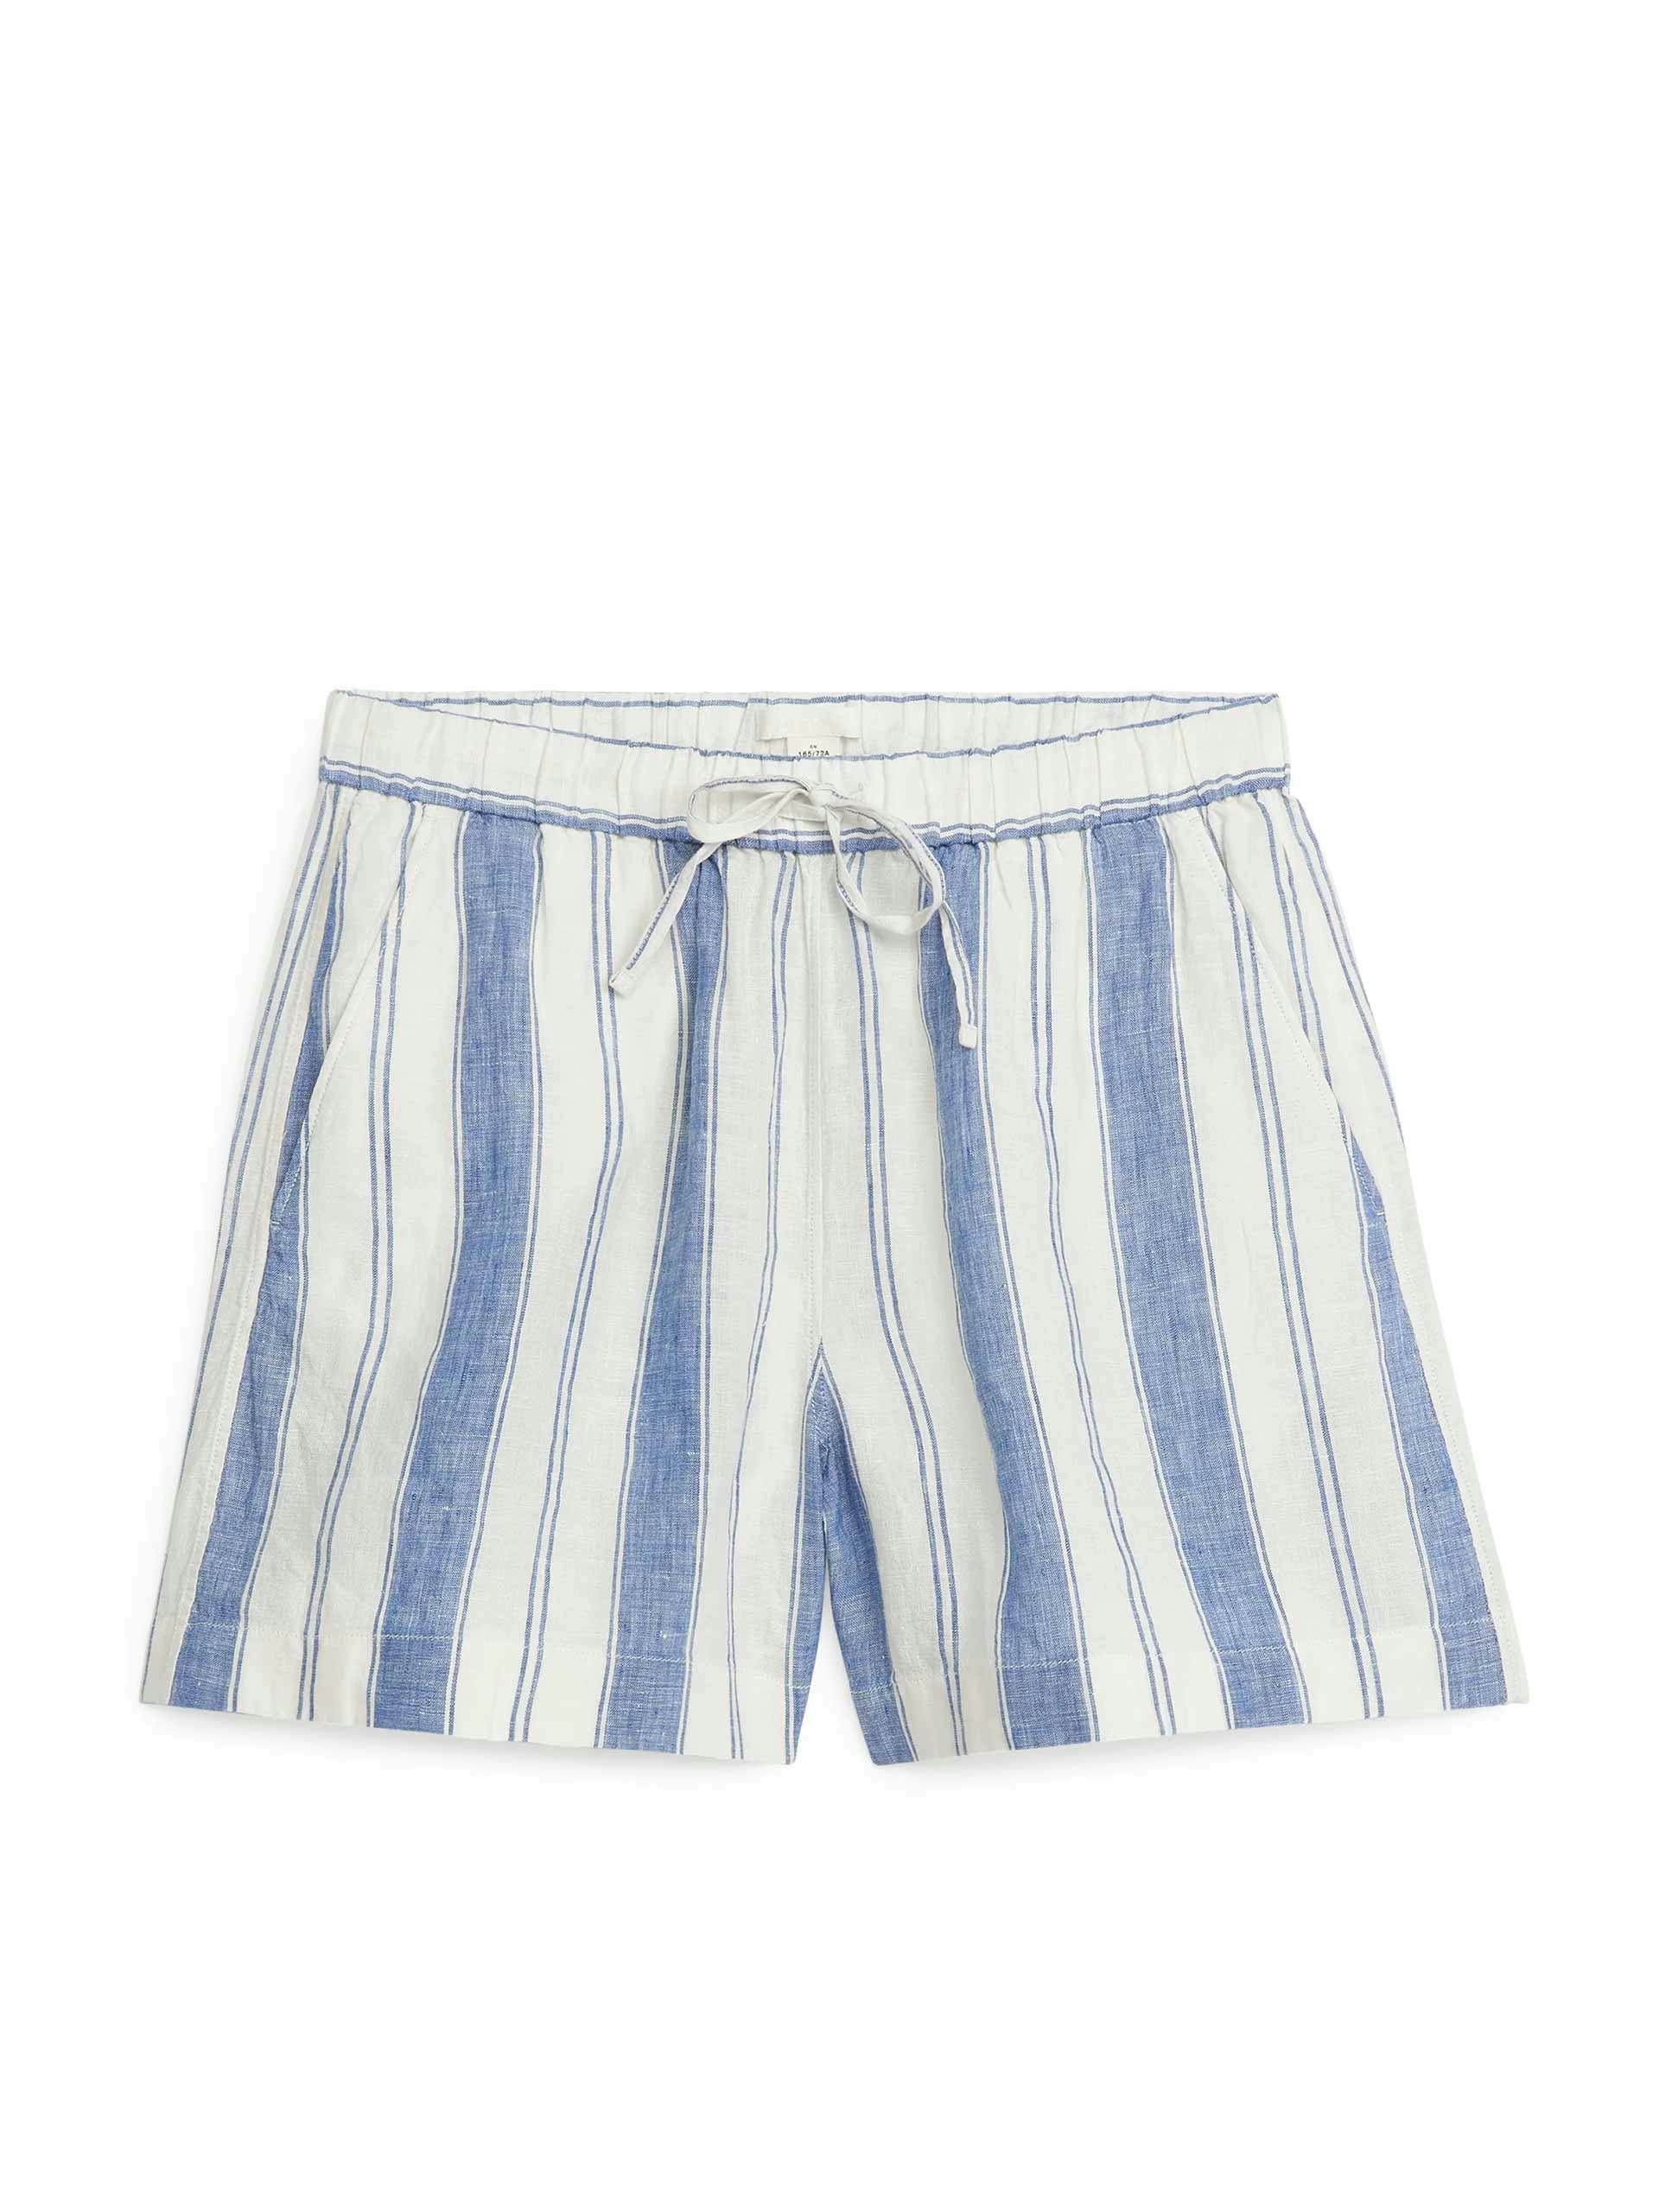 Blue striped linen shorts